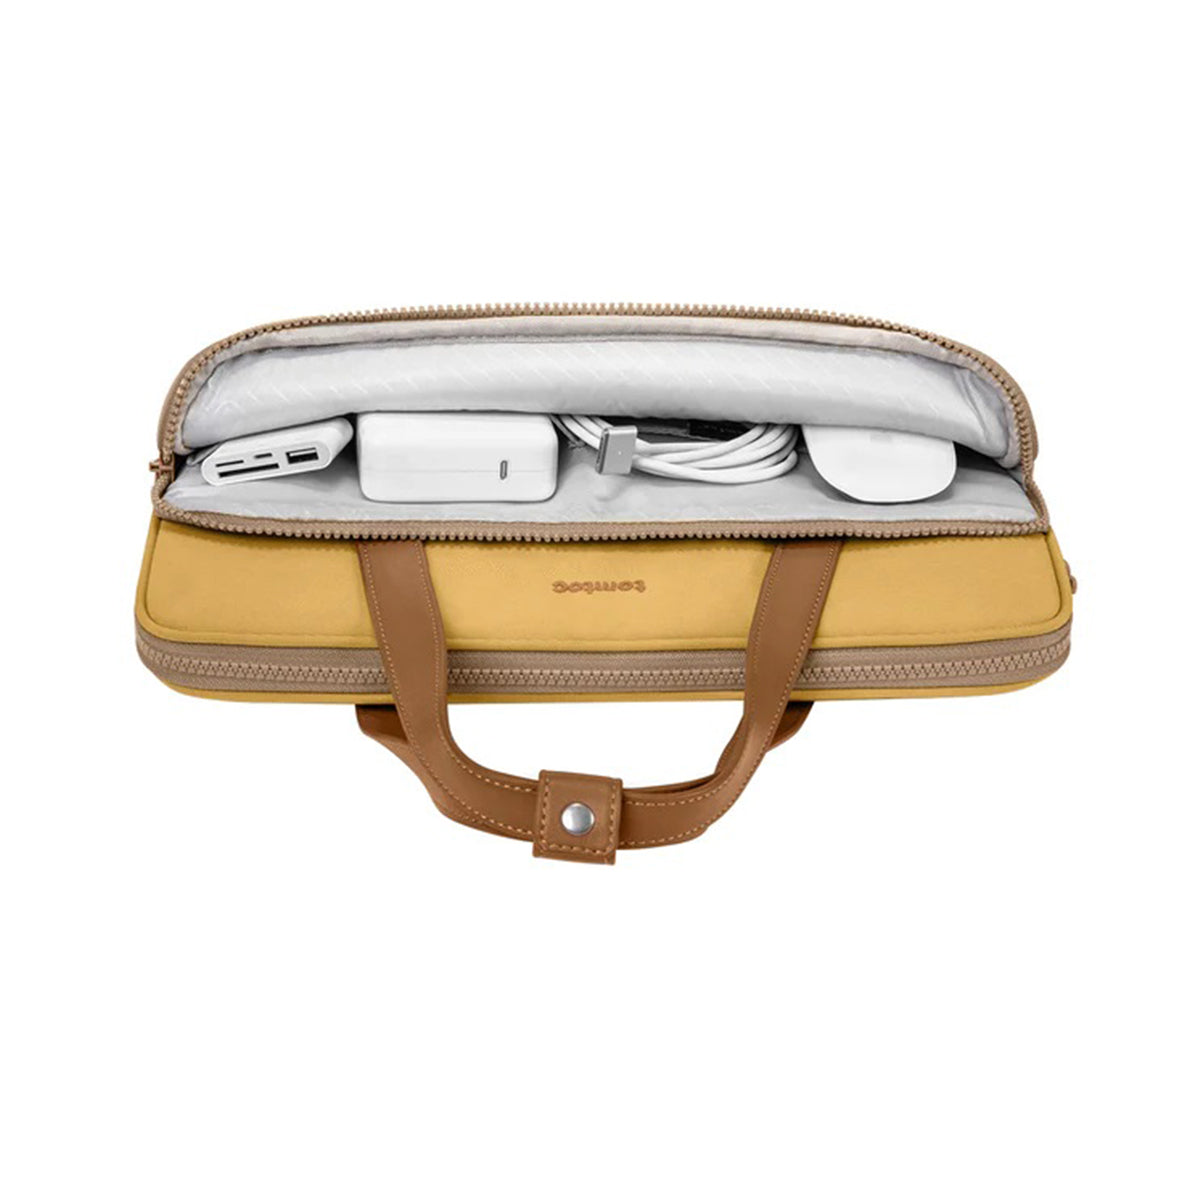 Tomtoc TheHer Laptop Shoulder Bag for MacBook Pro 12″-14″